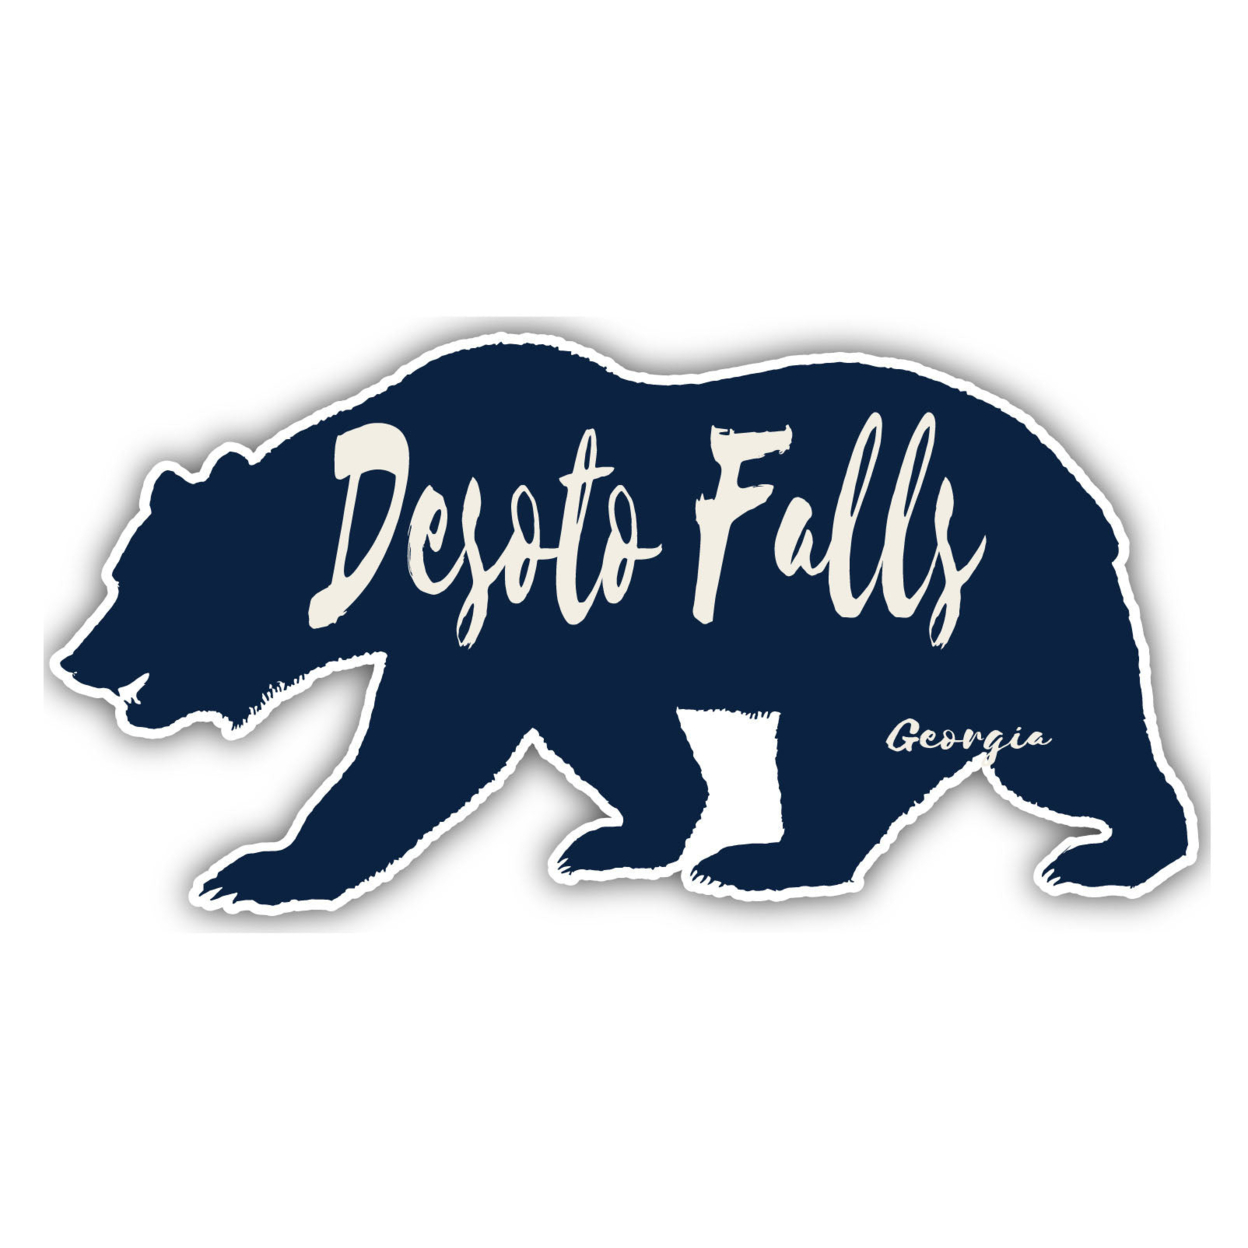 DeSoto Falls Georgia Souvenir Decorative Stickers (Choose Theme And Size) - Single Unit, 6-Inch, Bear